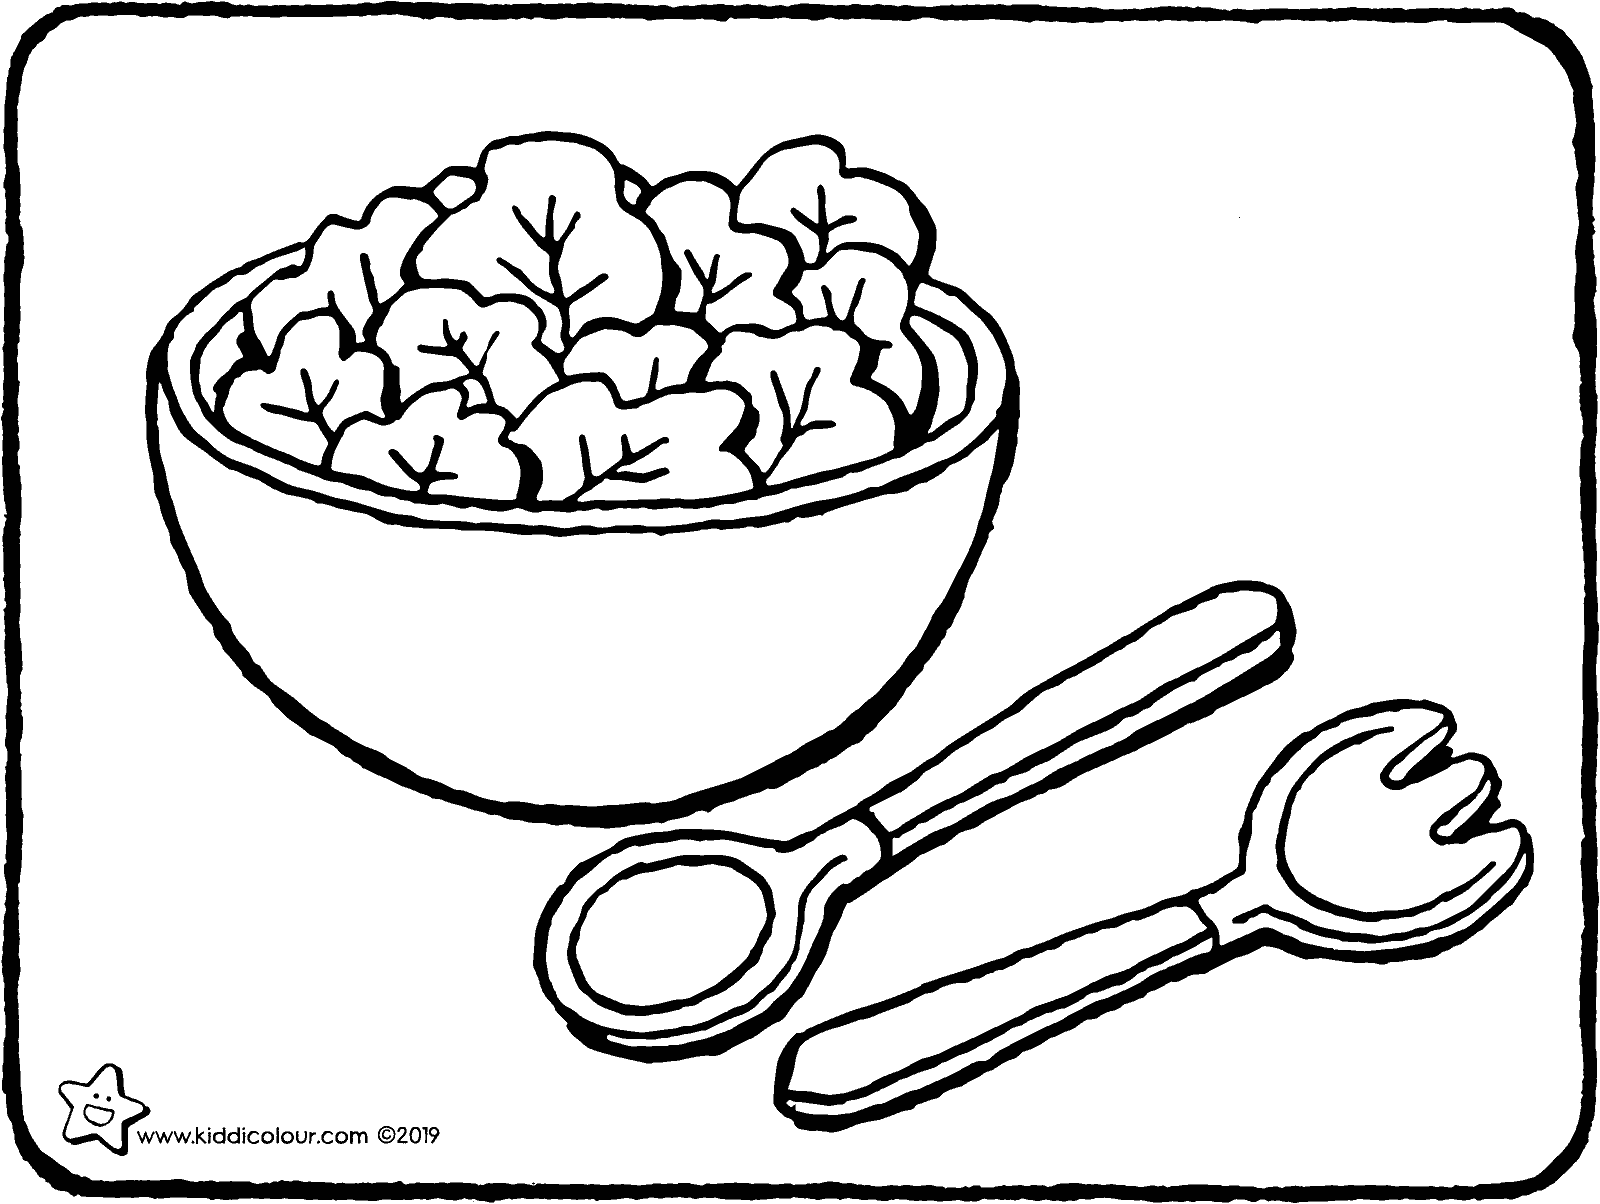 salad bowl - kiddicolour